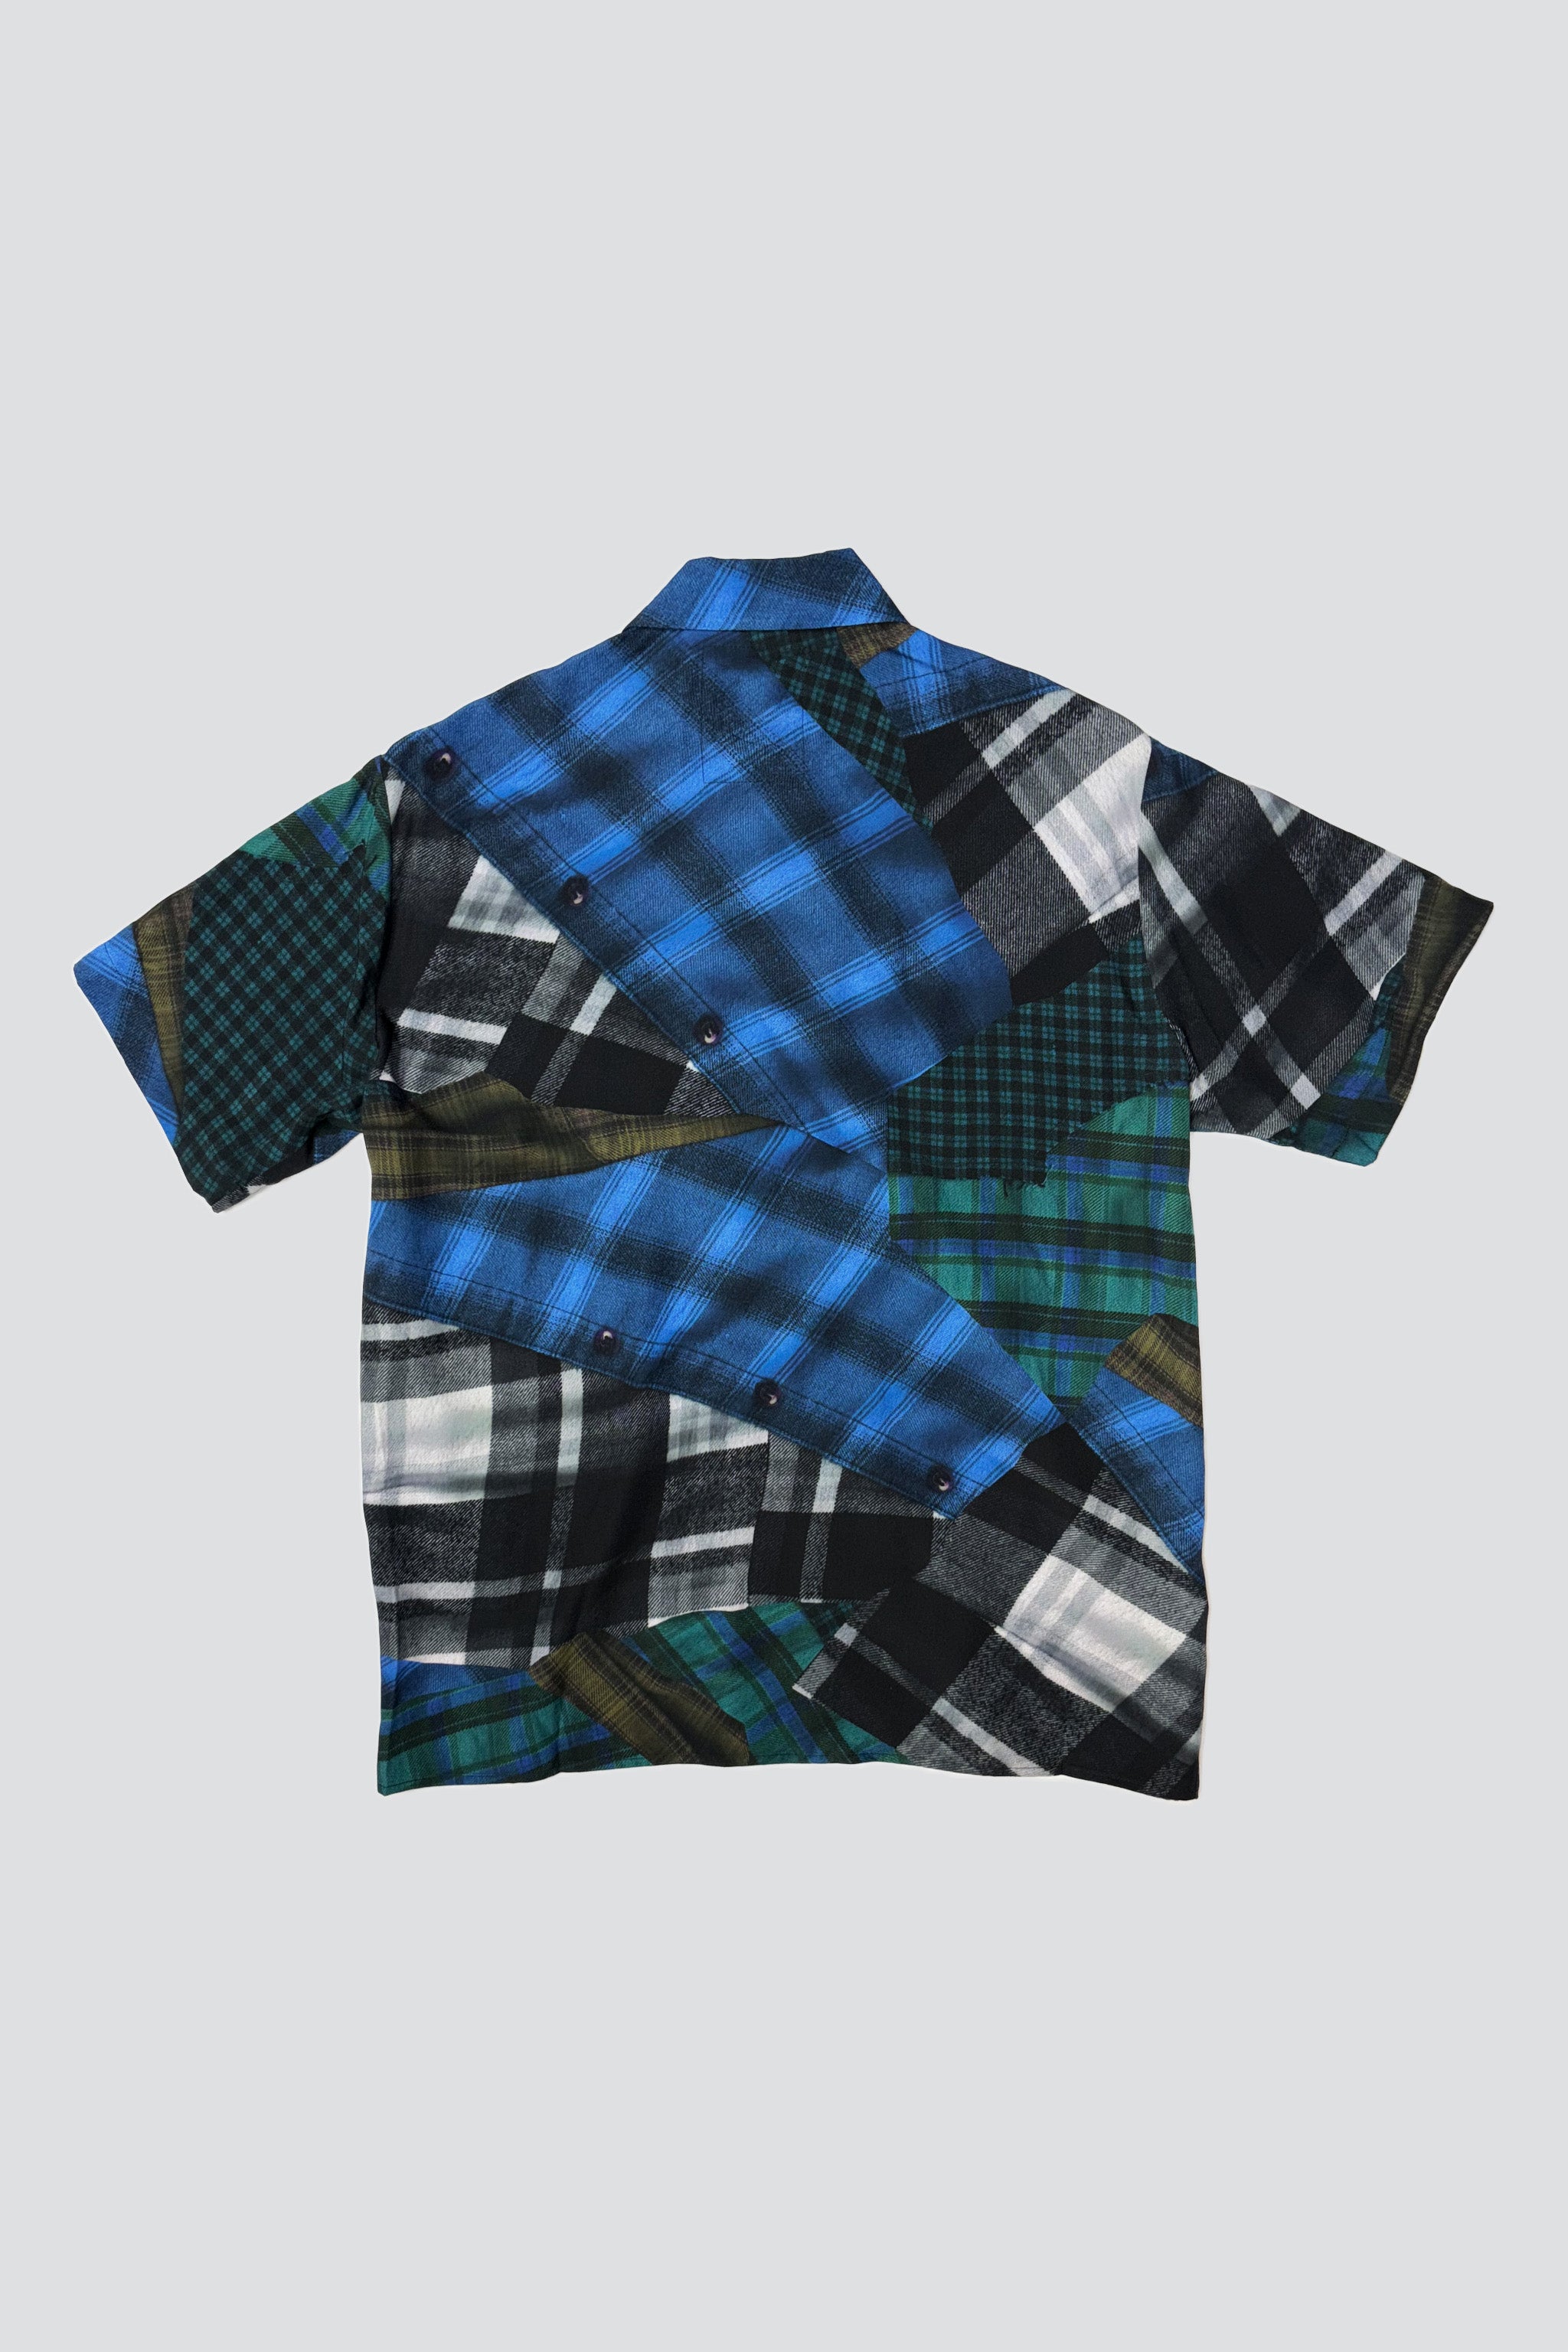 Mixed Flannel Print Rayon Camp Shirt